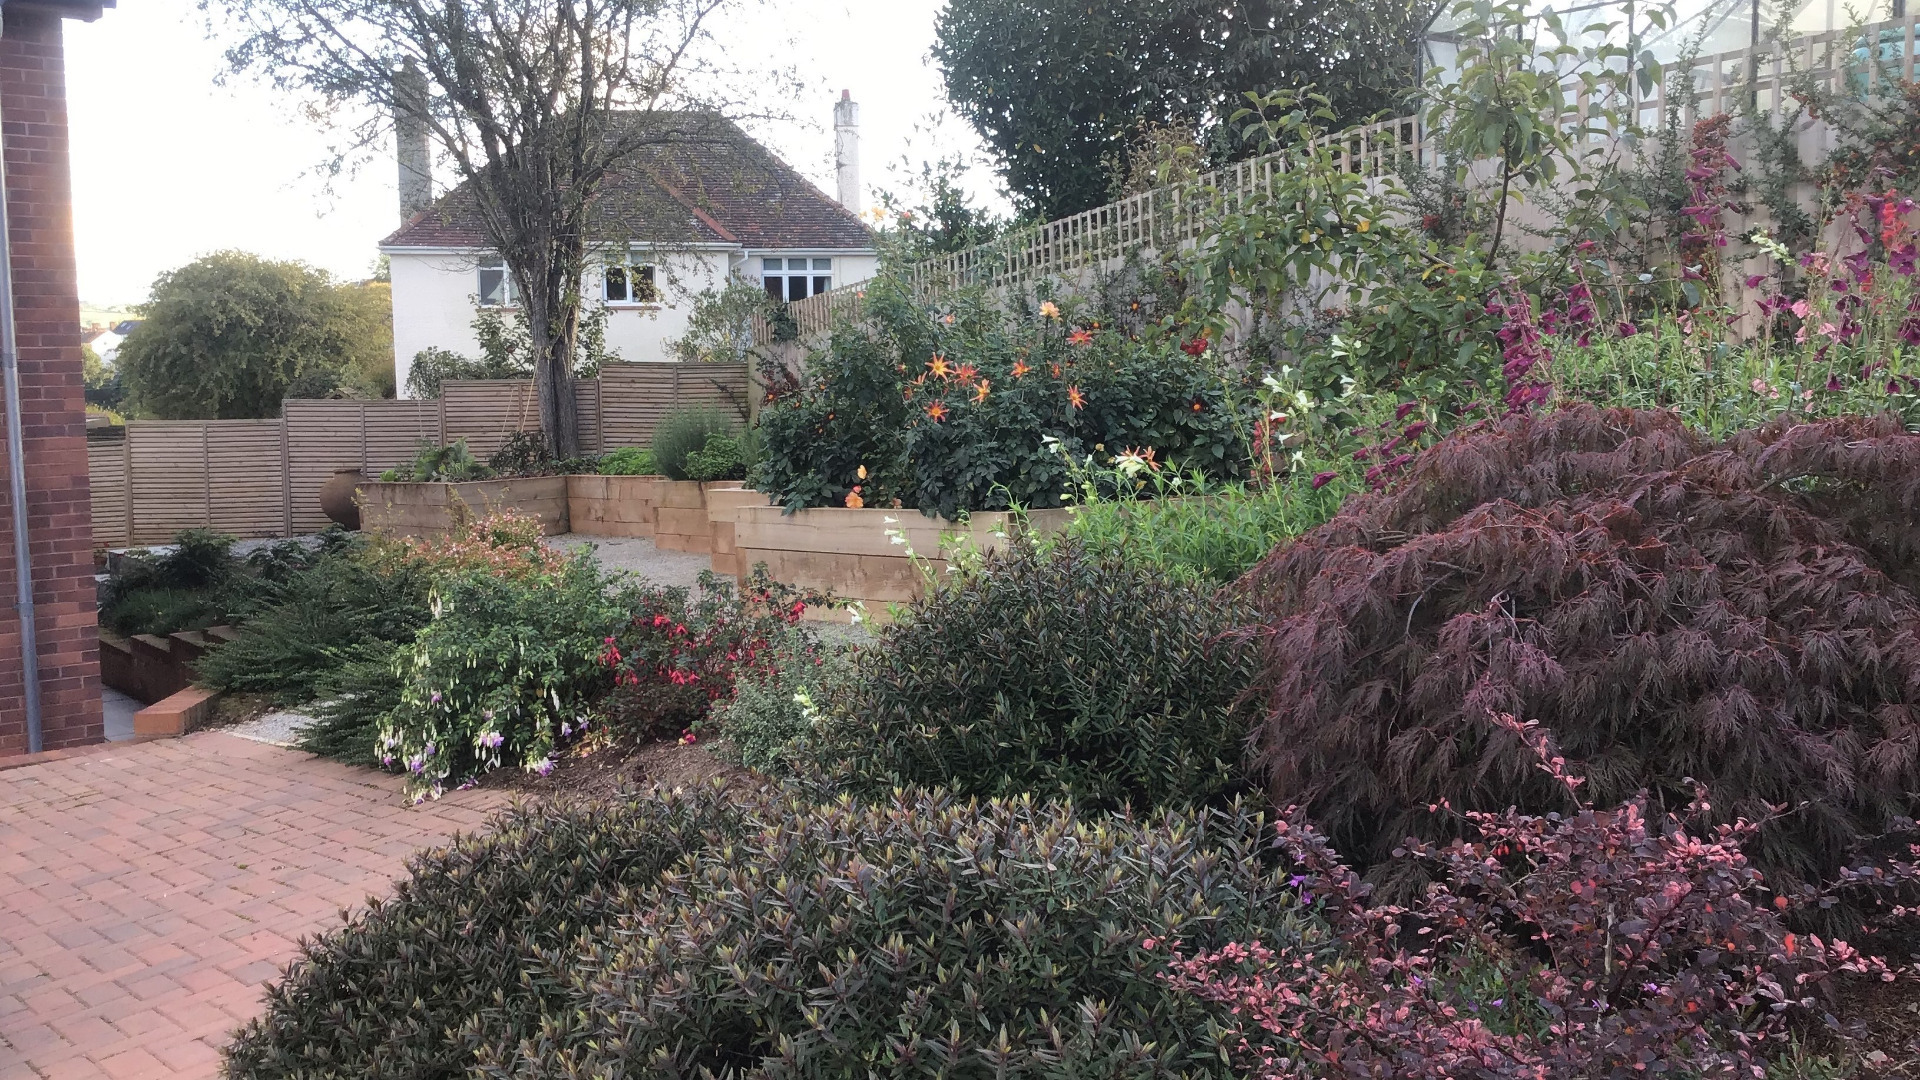 Alison Bockh Garden Design and Landscaping - North Devon - Side area after - hard landscaping and raised beds a